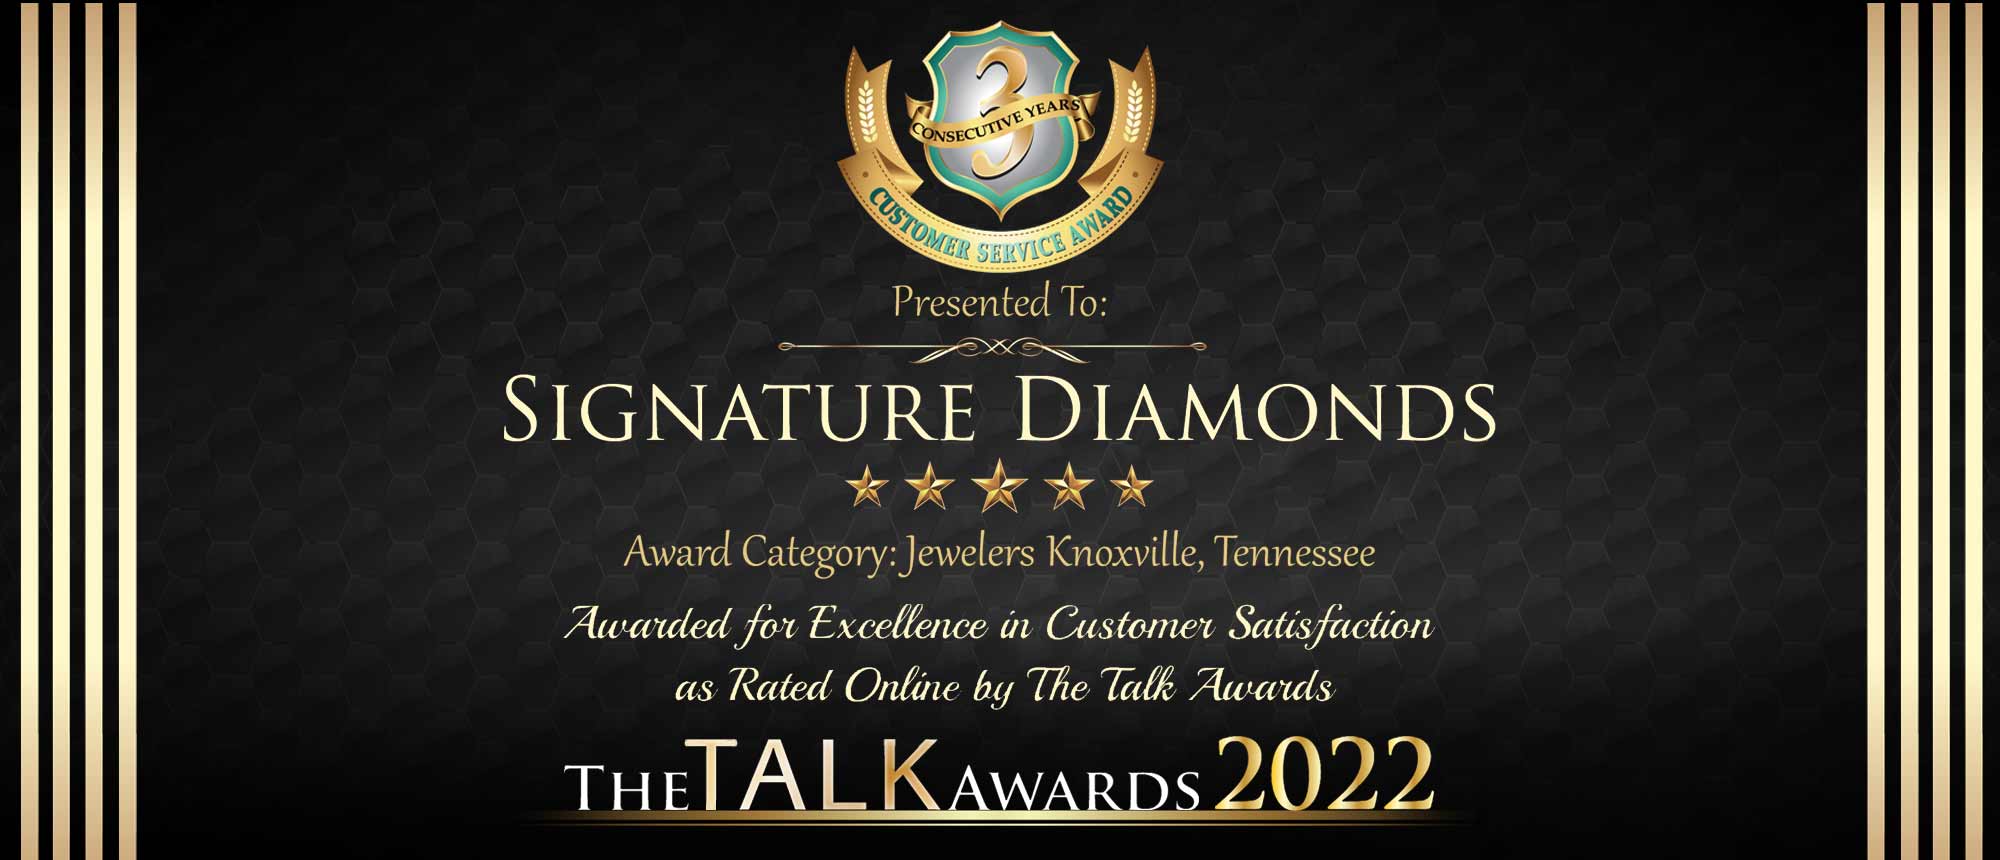 The Talk Award to Signature Diamonds